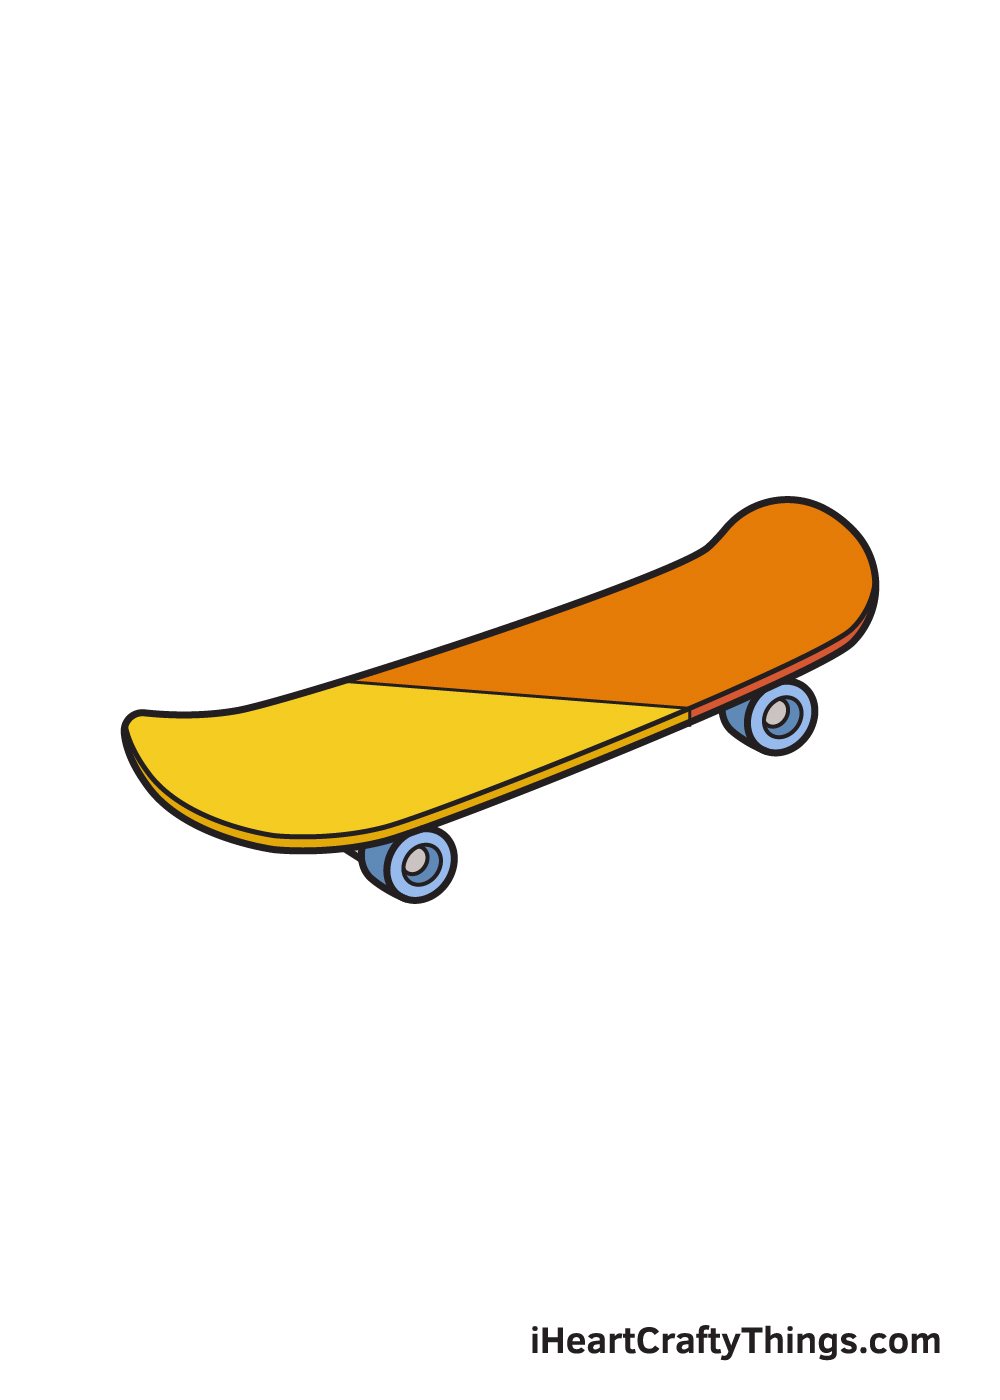 Share more than 222 skateboard sketch